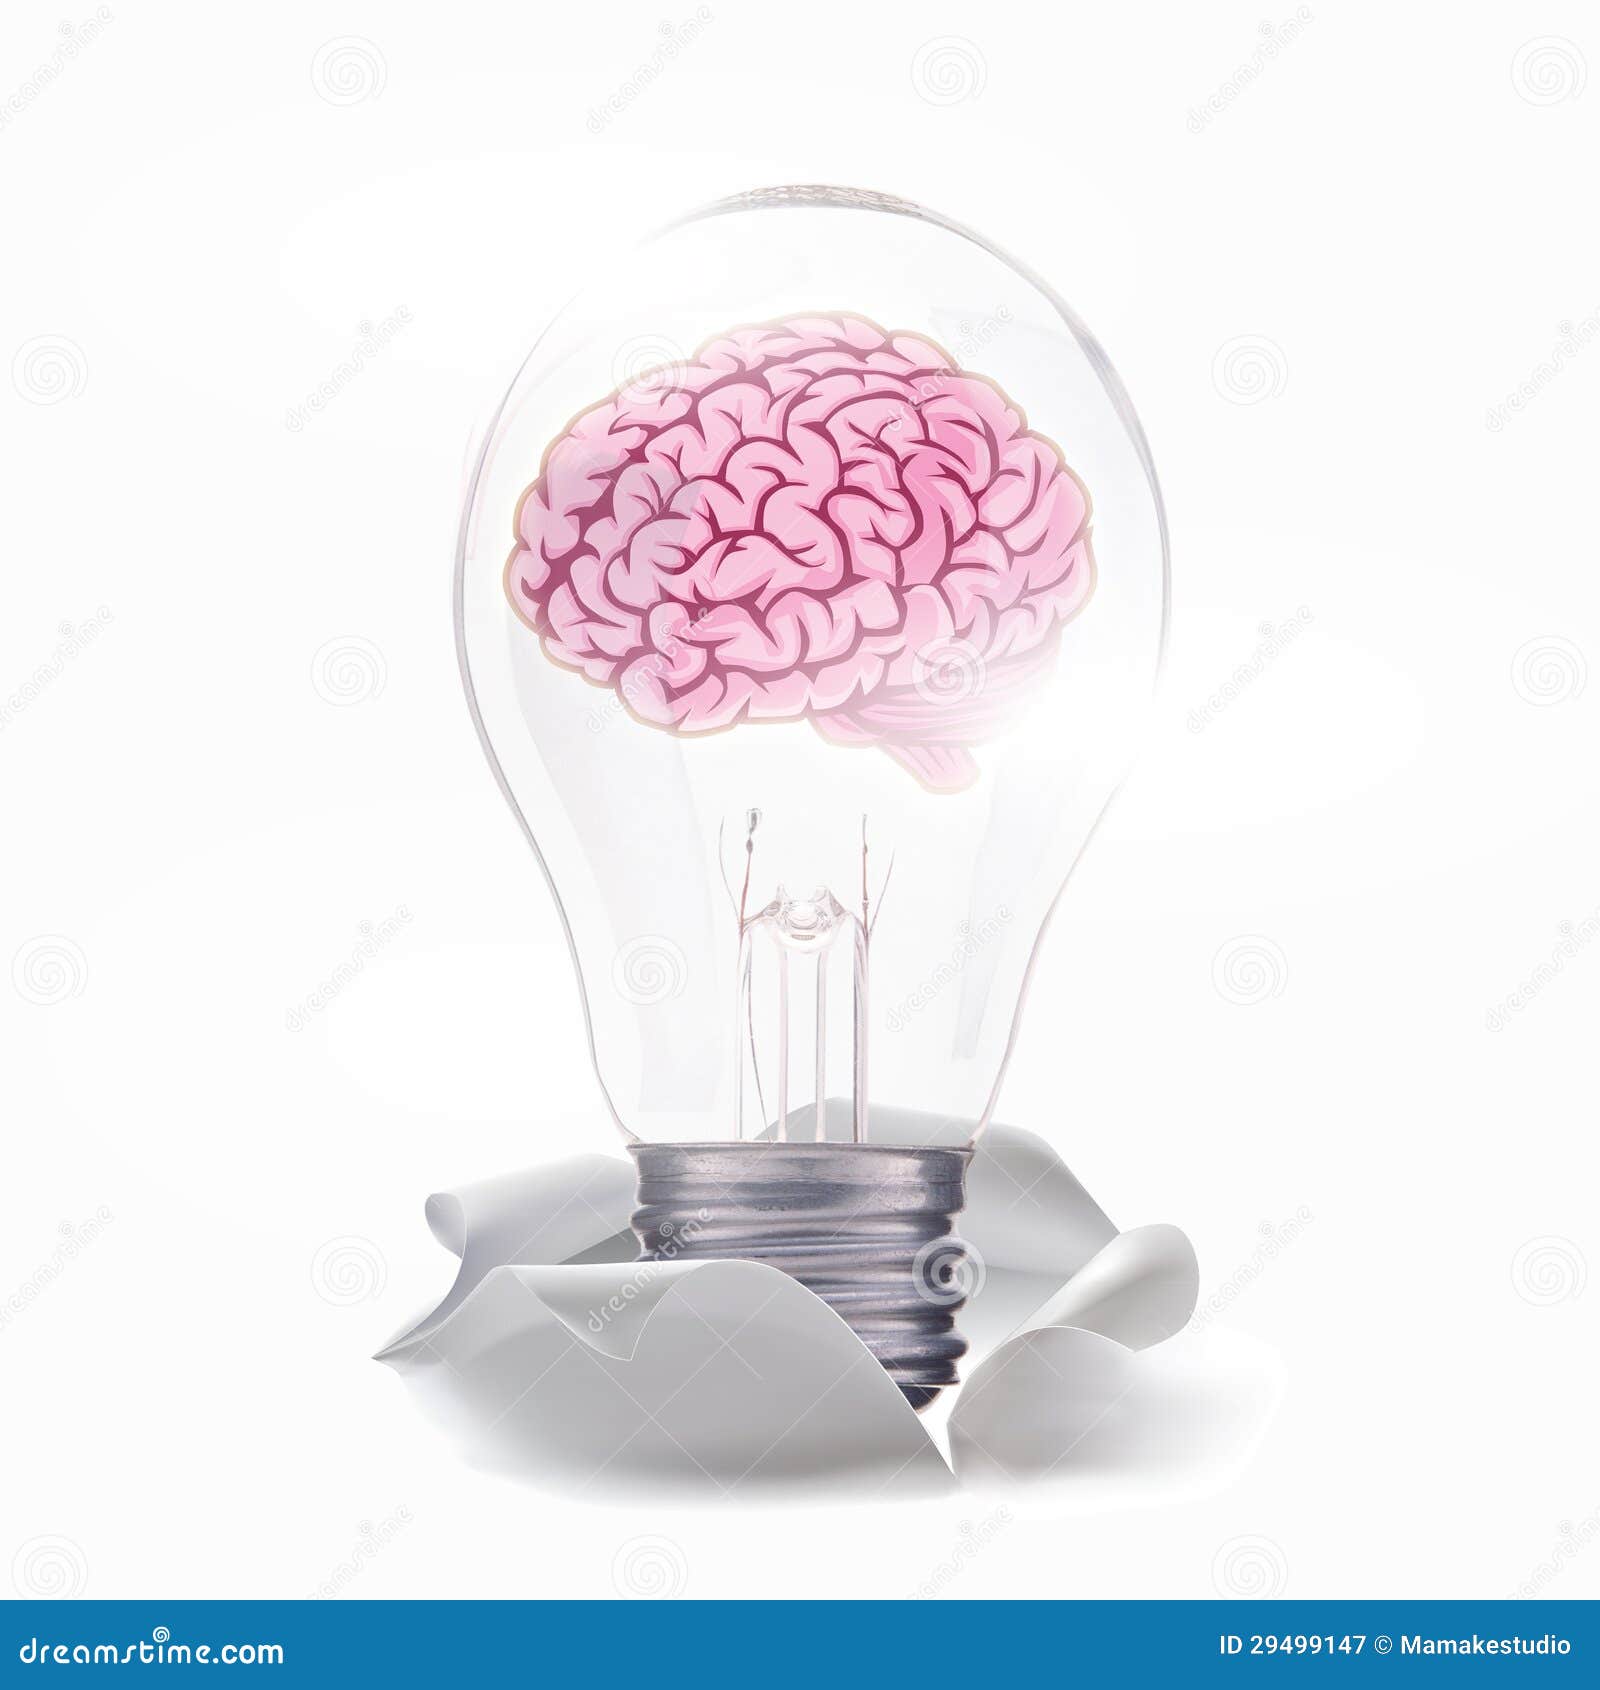 https://thumbs.dreamstime.com/z/fresh-idea-brain-lamp-29499147.jpg